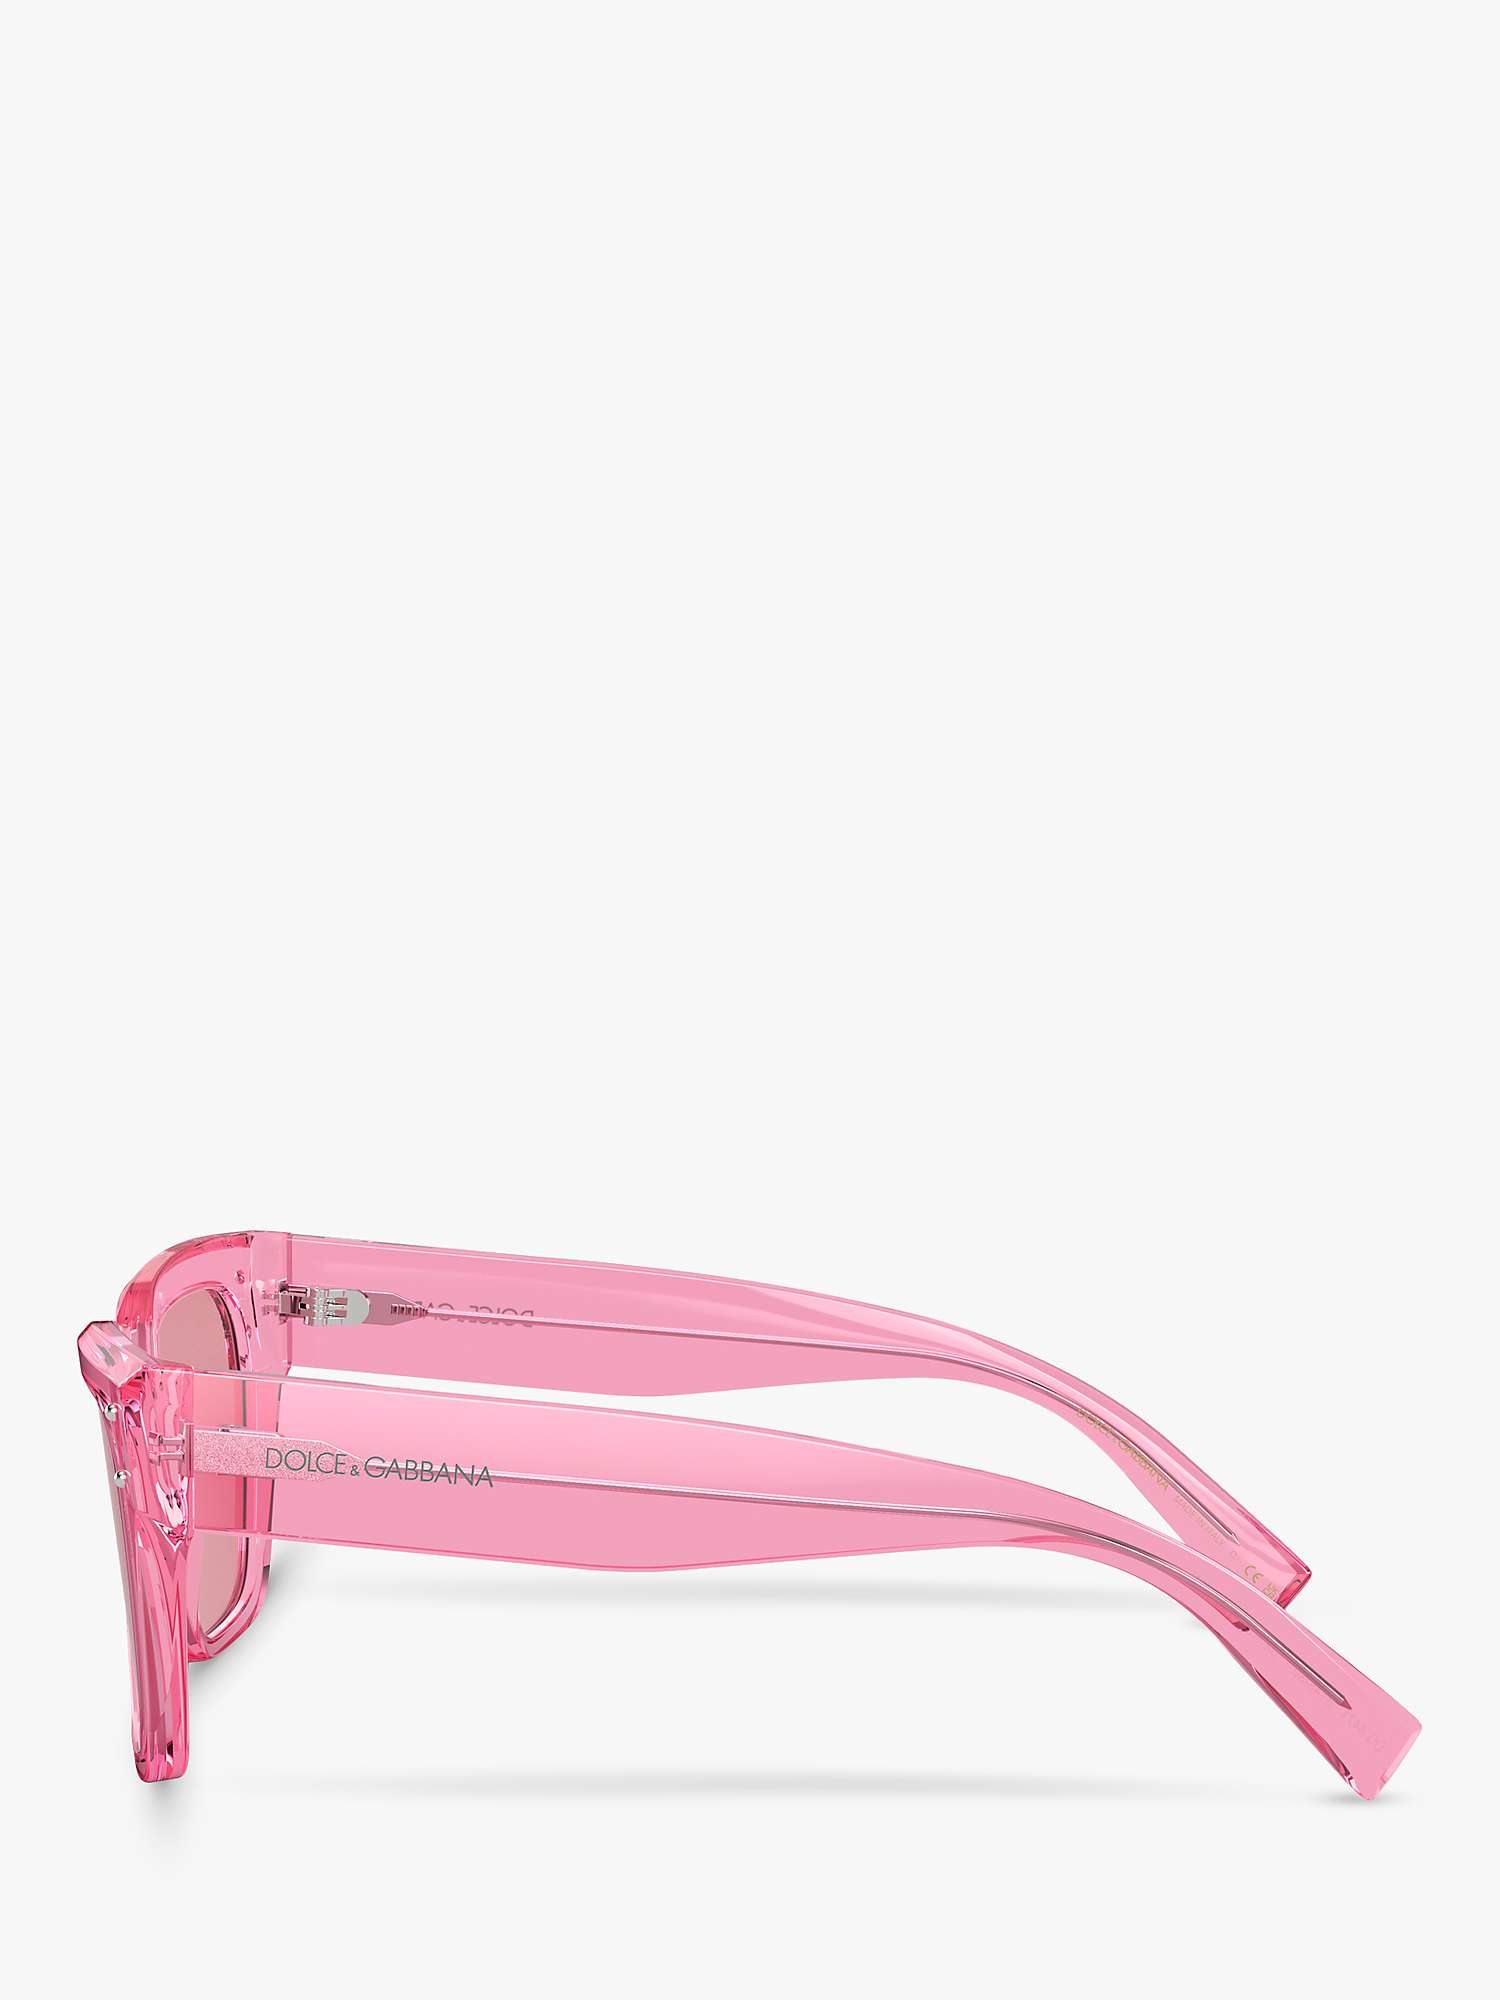 Buy Dolce & Gabbana DG4471 Women's Rectangular Sunglasses, Transparent Pink/Pink Online at johnlewis.com